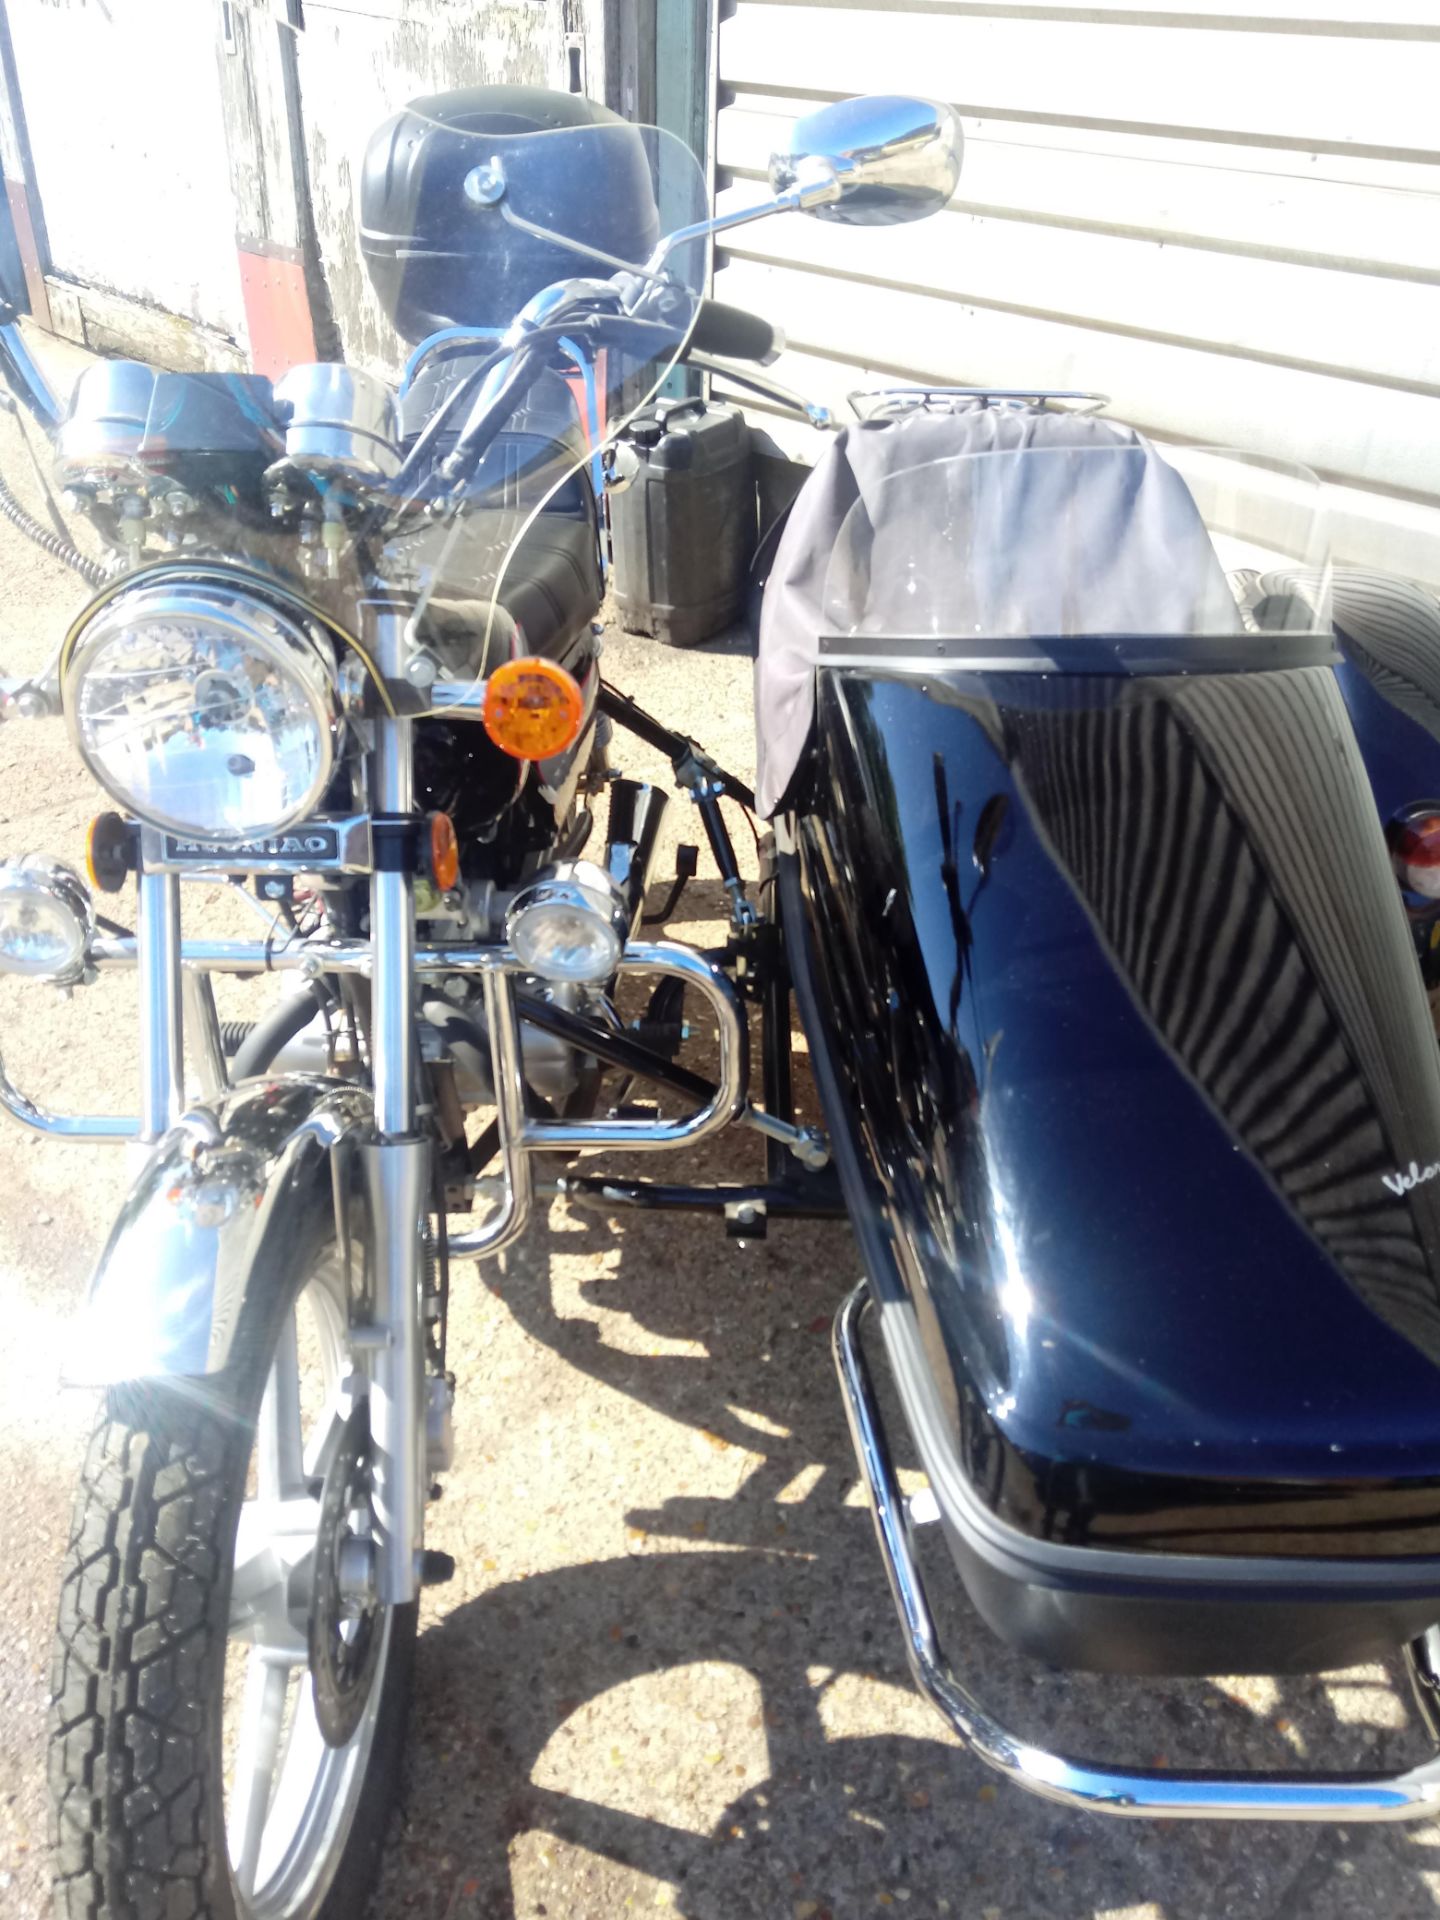 HUONIAO HN125-8 MOTORBIKE WITH A VEOREX SPORT SIDECAR